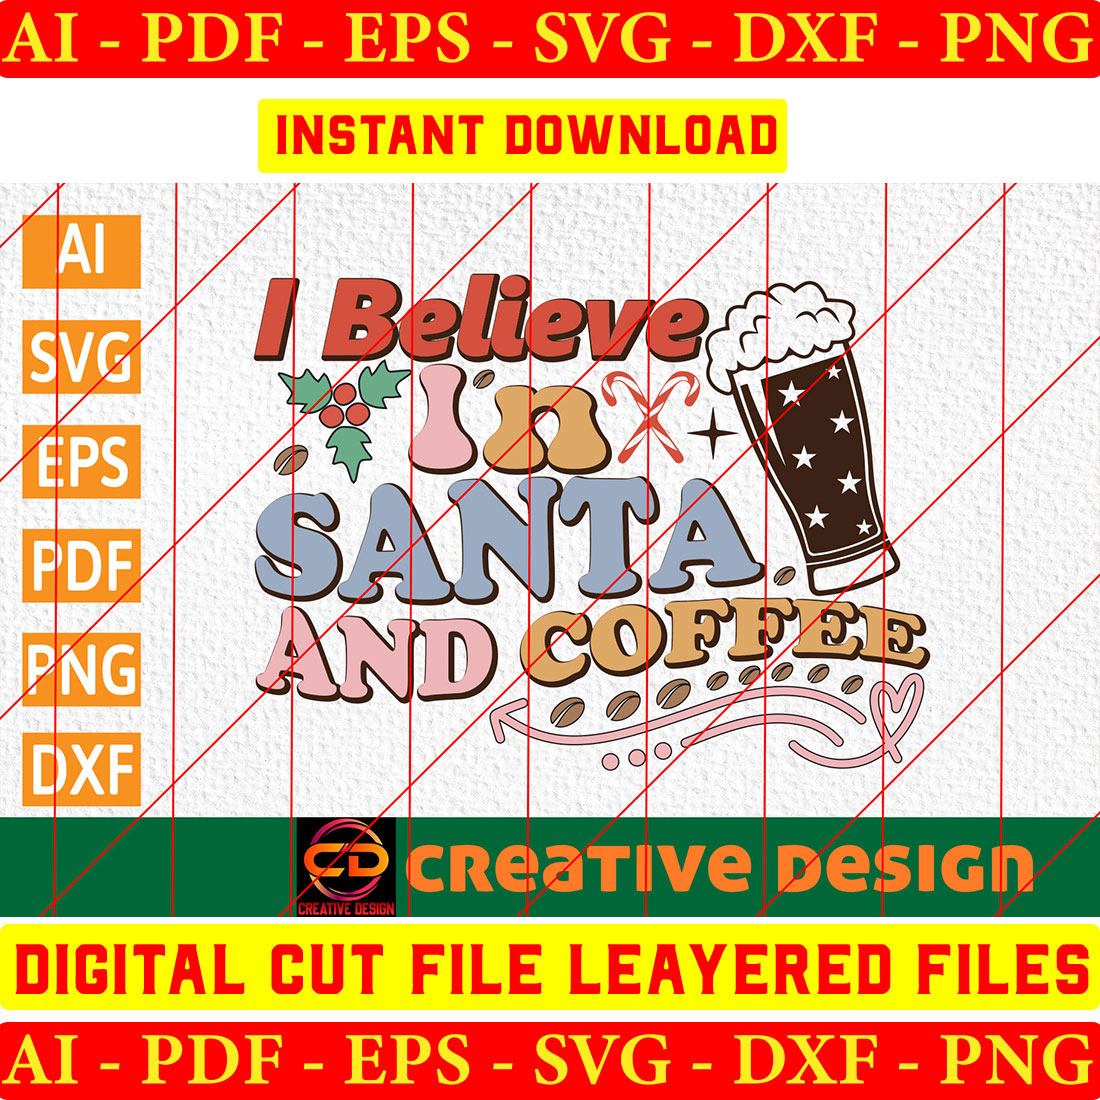 I believe it's santa and coffee digital cut file.